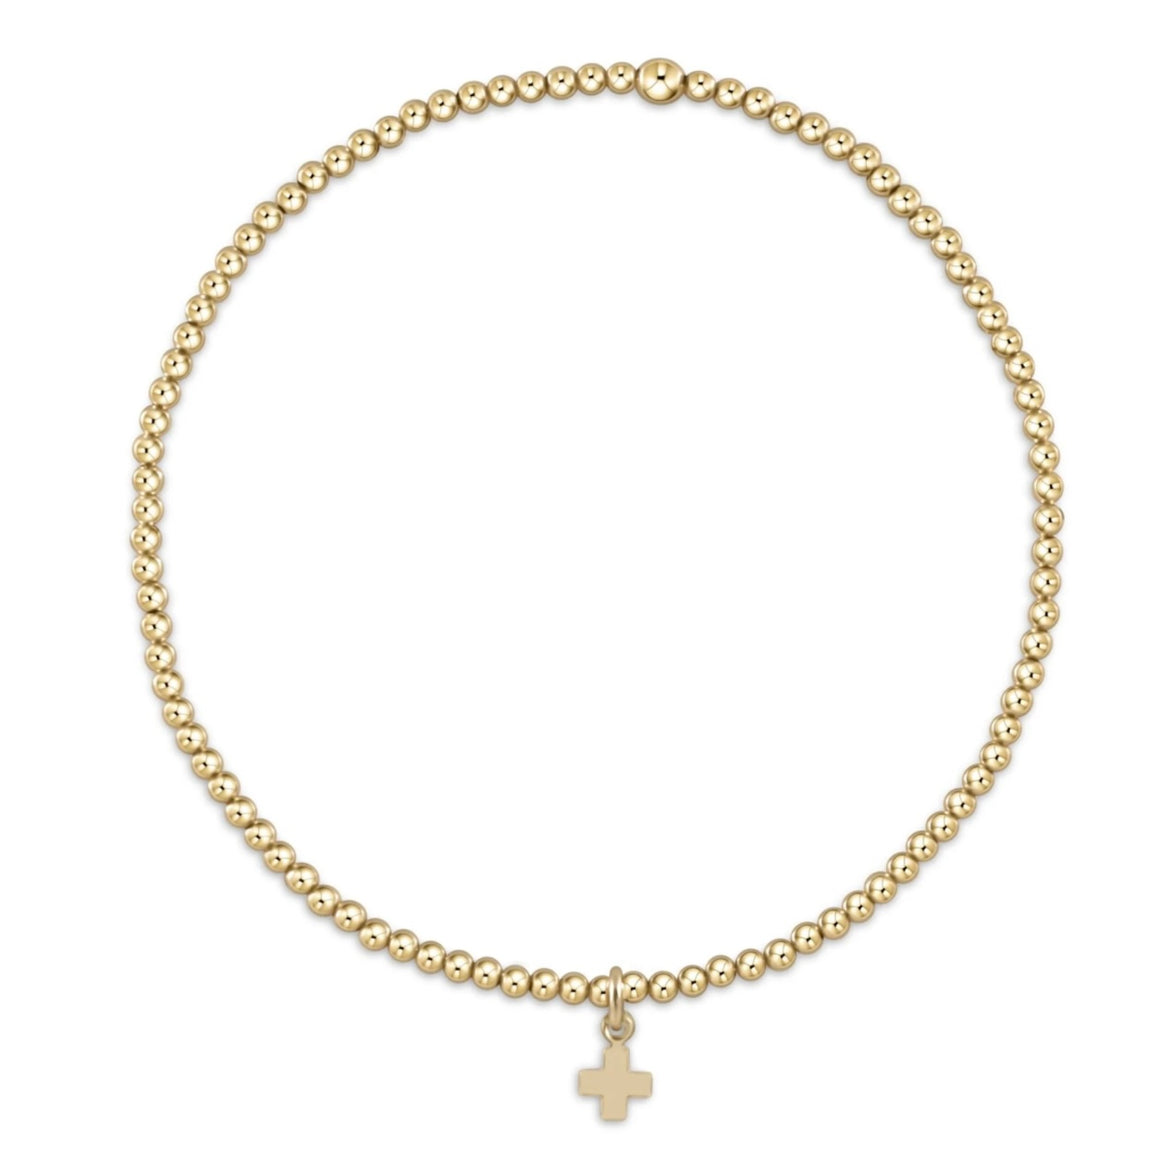 egirl | Classic Gold 2mm Bracelet - Signature Cross Small Gold Charm